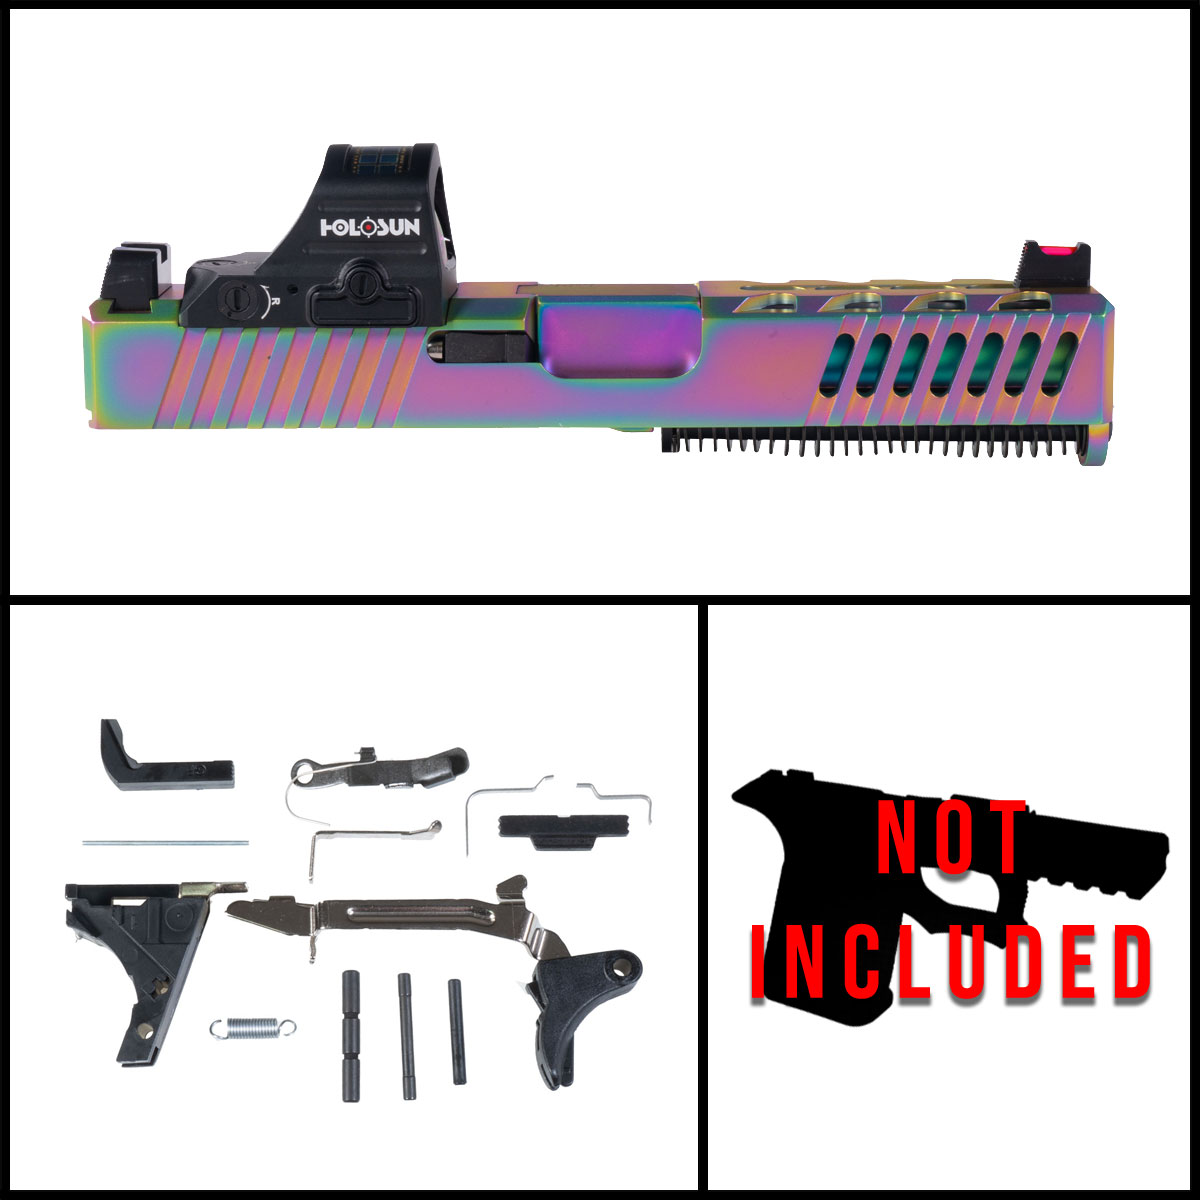 DTT 'ArcLight w/ HS507C-X2' 9mm Full Pistol Build Kits (Everything Minus Frame) - Glock 19 Gen 1-3 Compatible